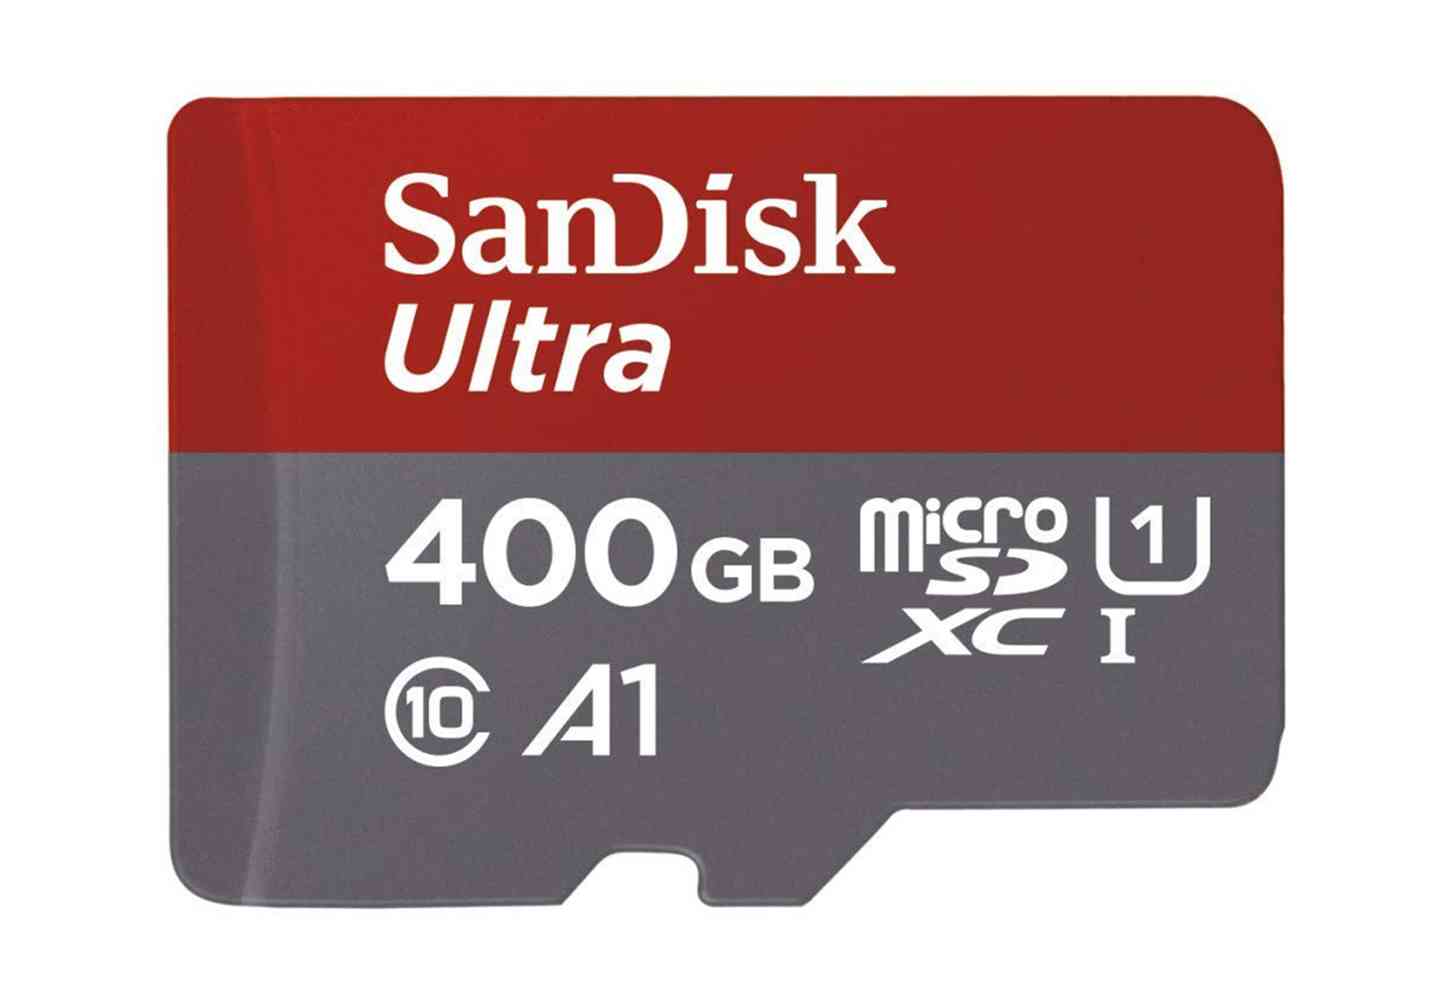 SanDisk 400GB microSD card